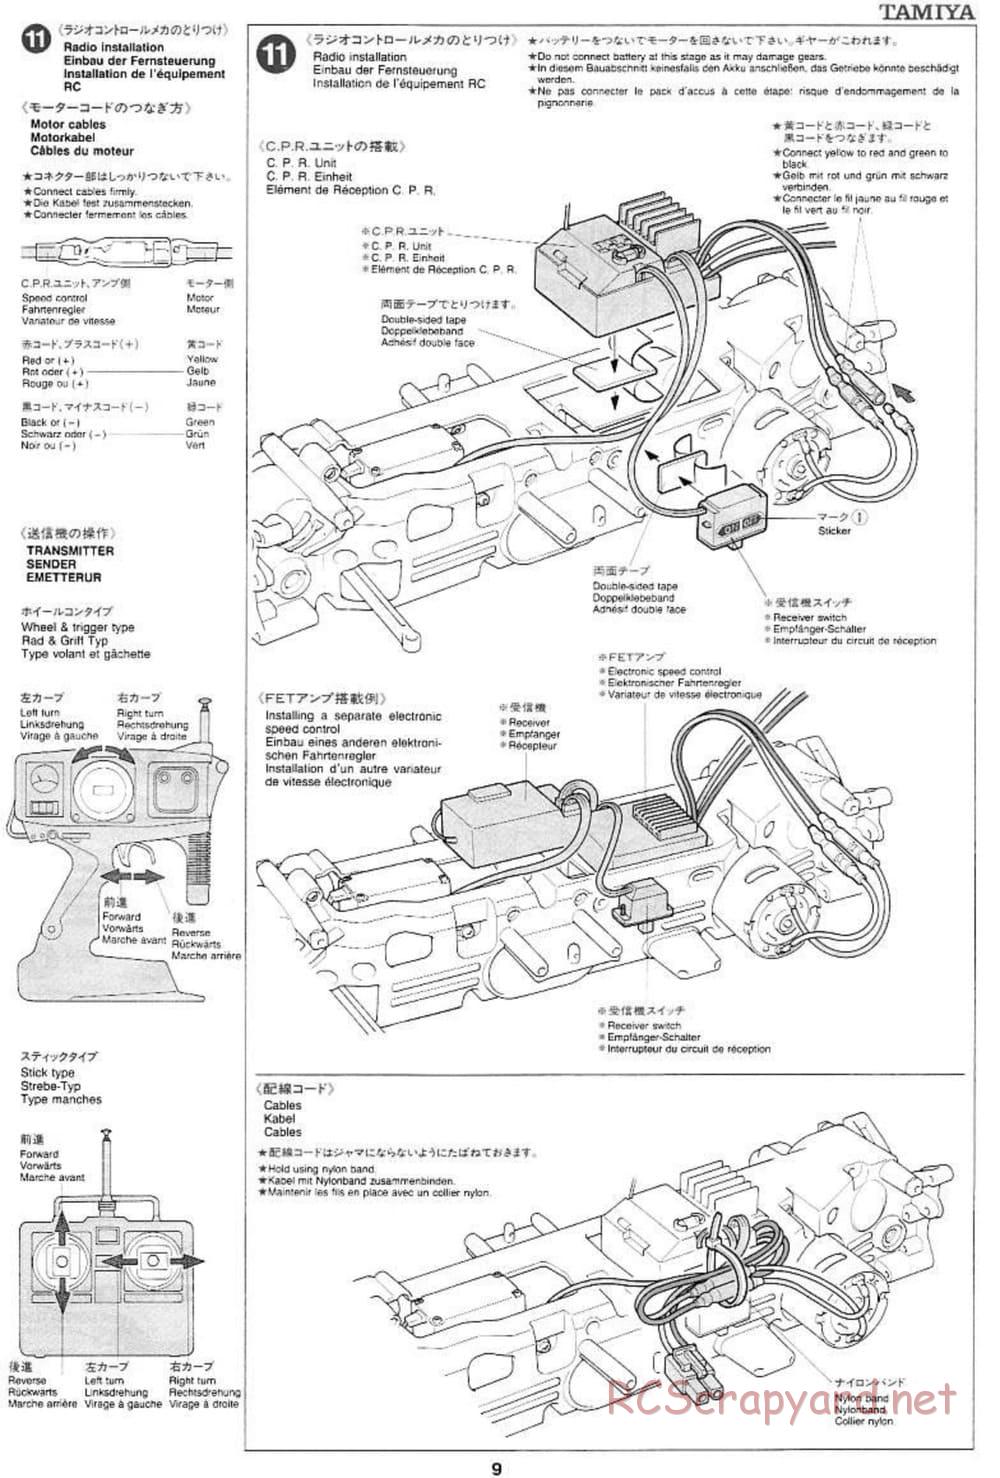 Tamiya - Ford SVT F-150 Lightning - TL-01 Chassis - Manual - Page 9